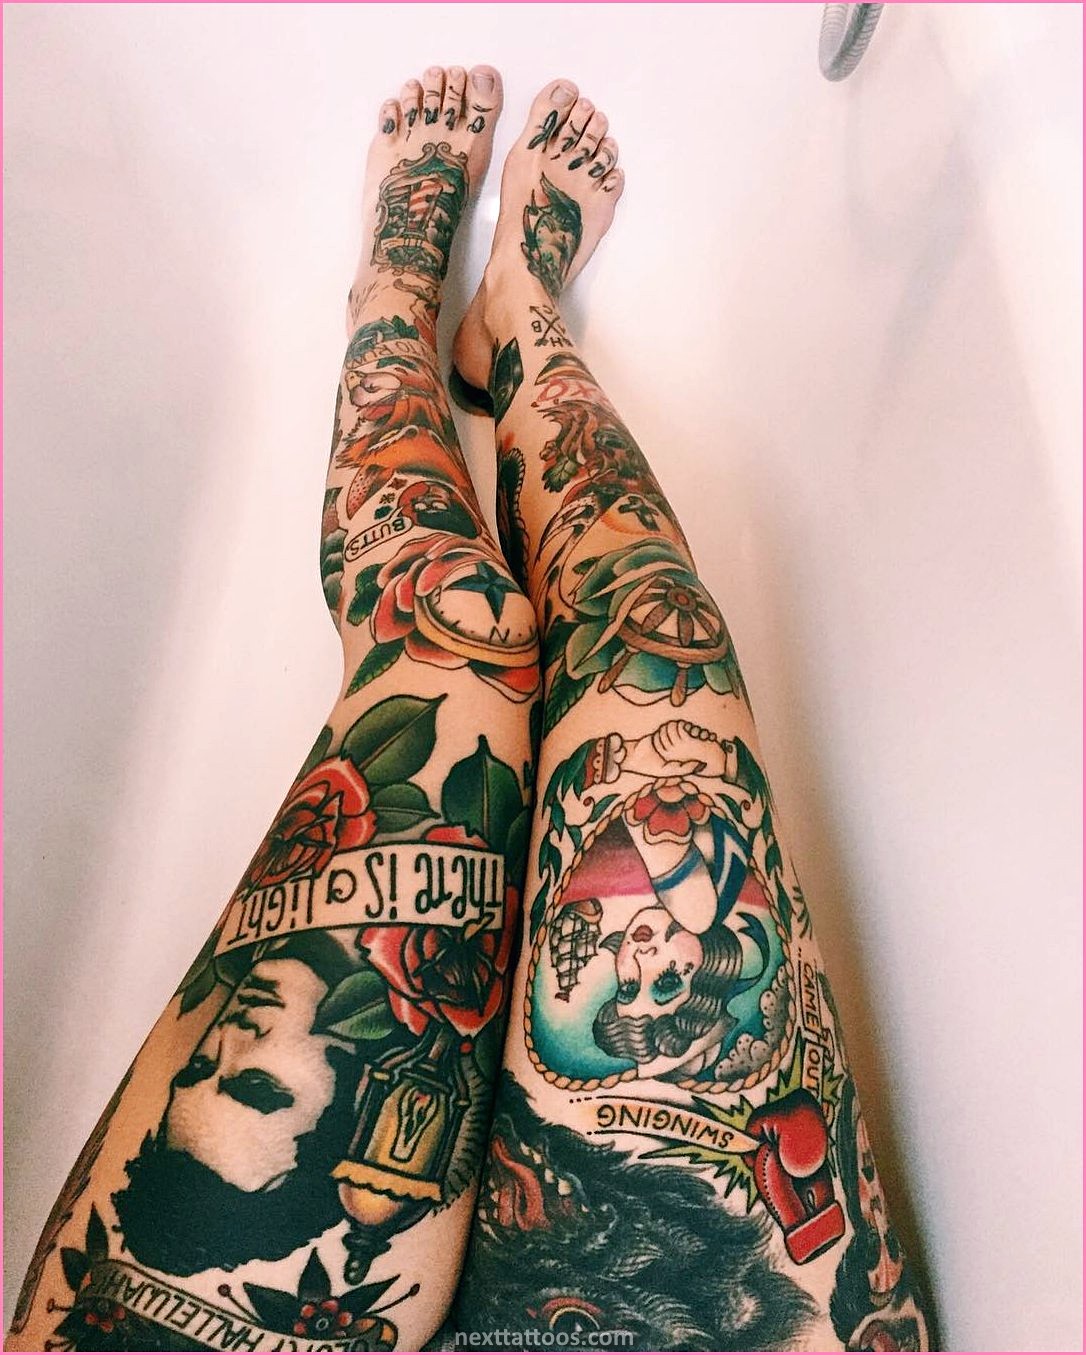 Leg Tattoo Ideas For Men and Women